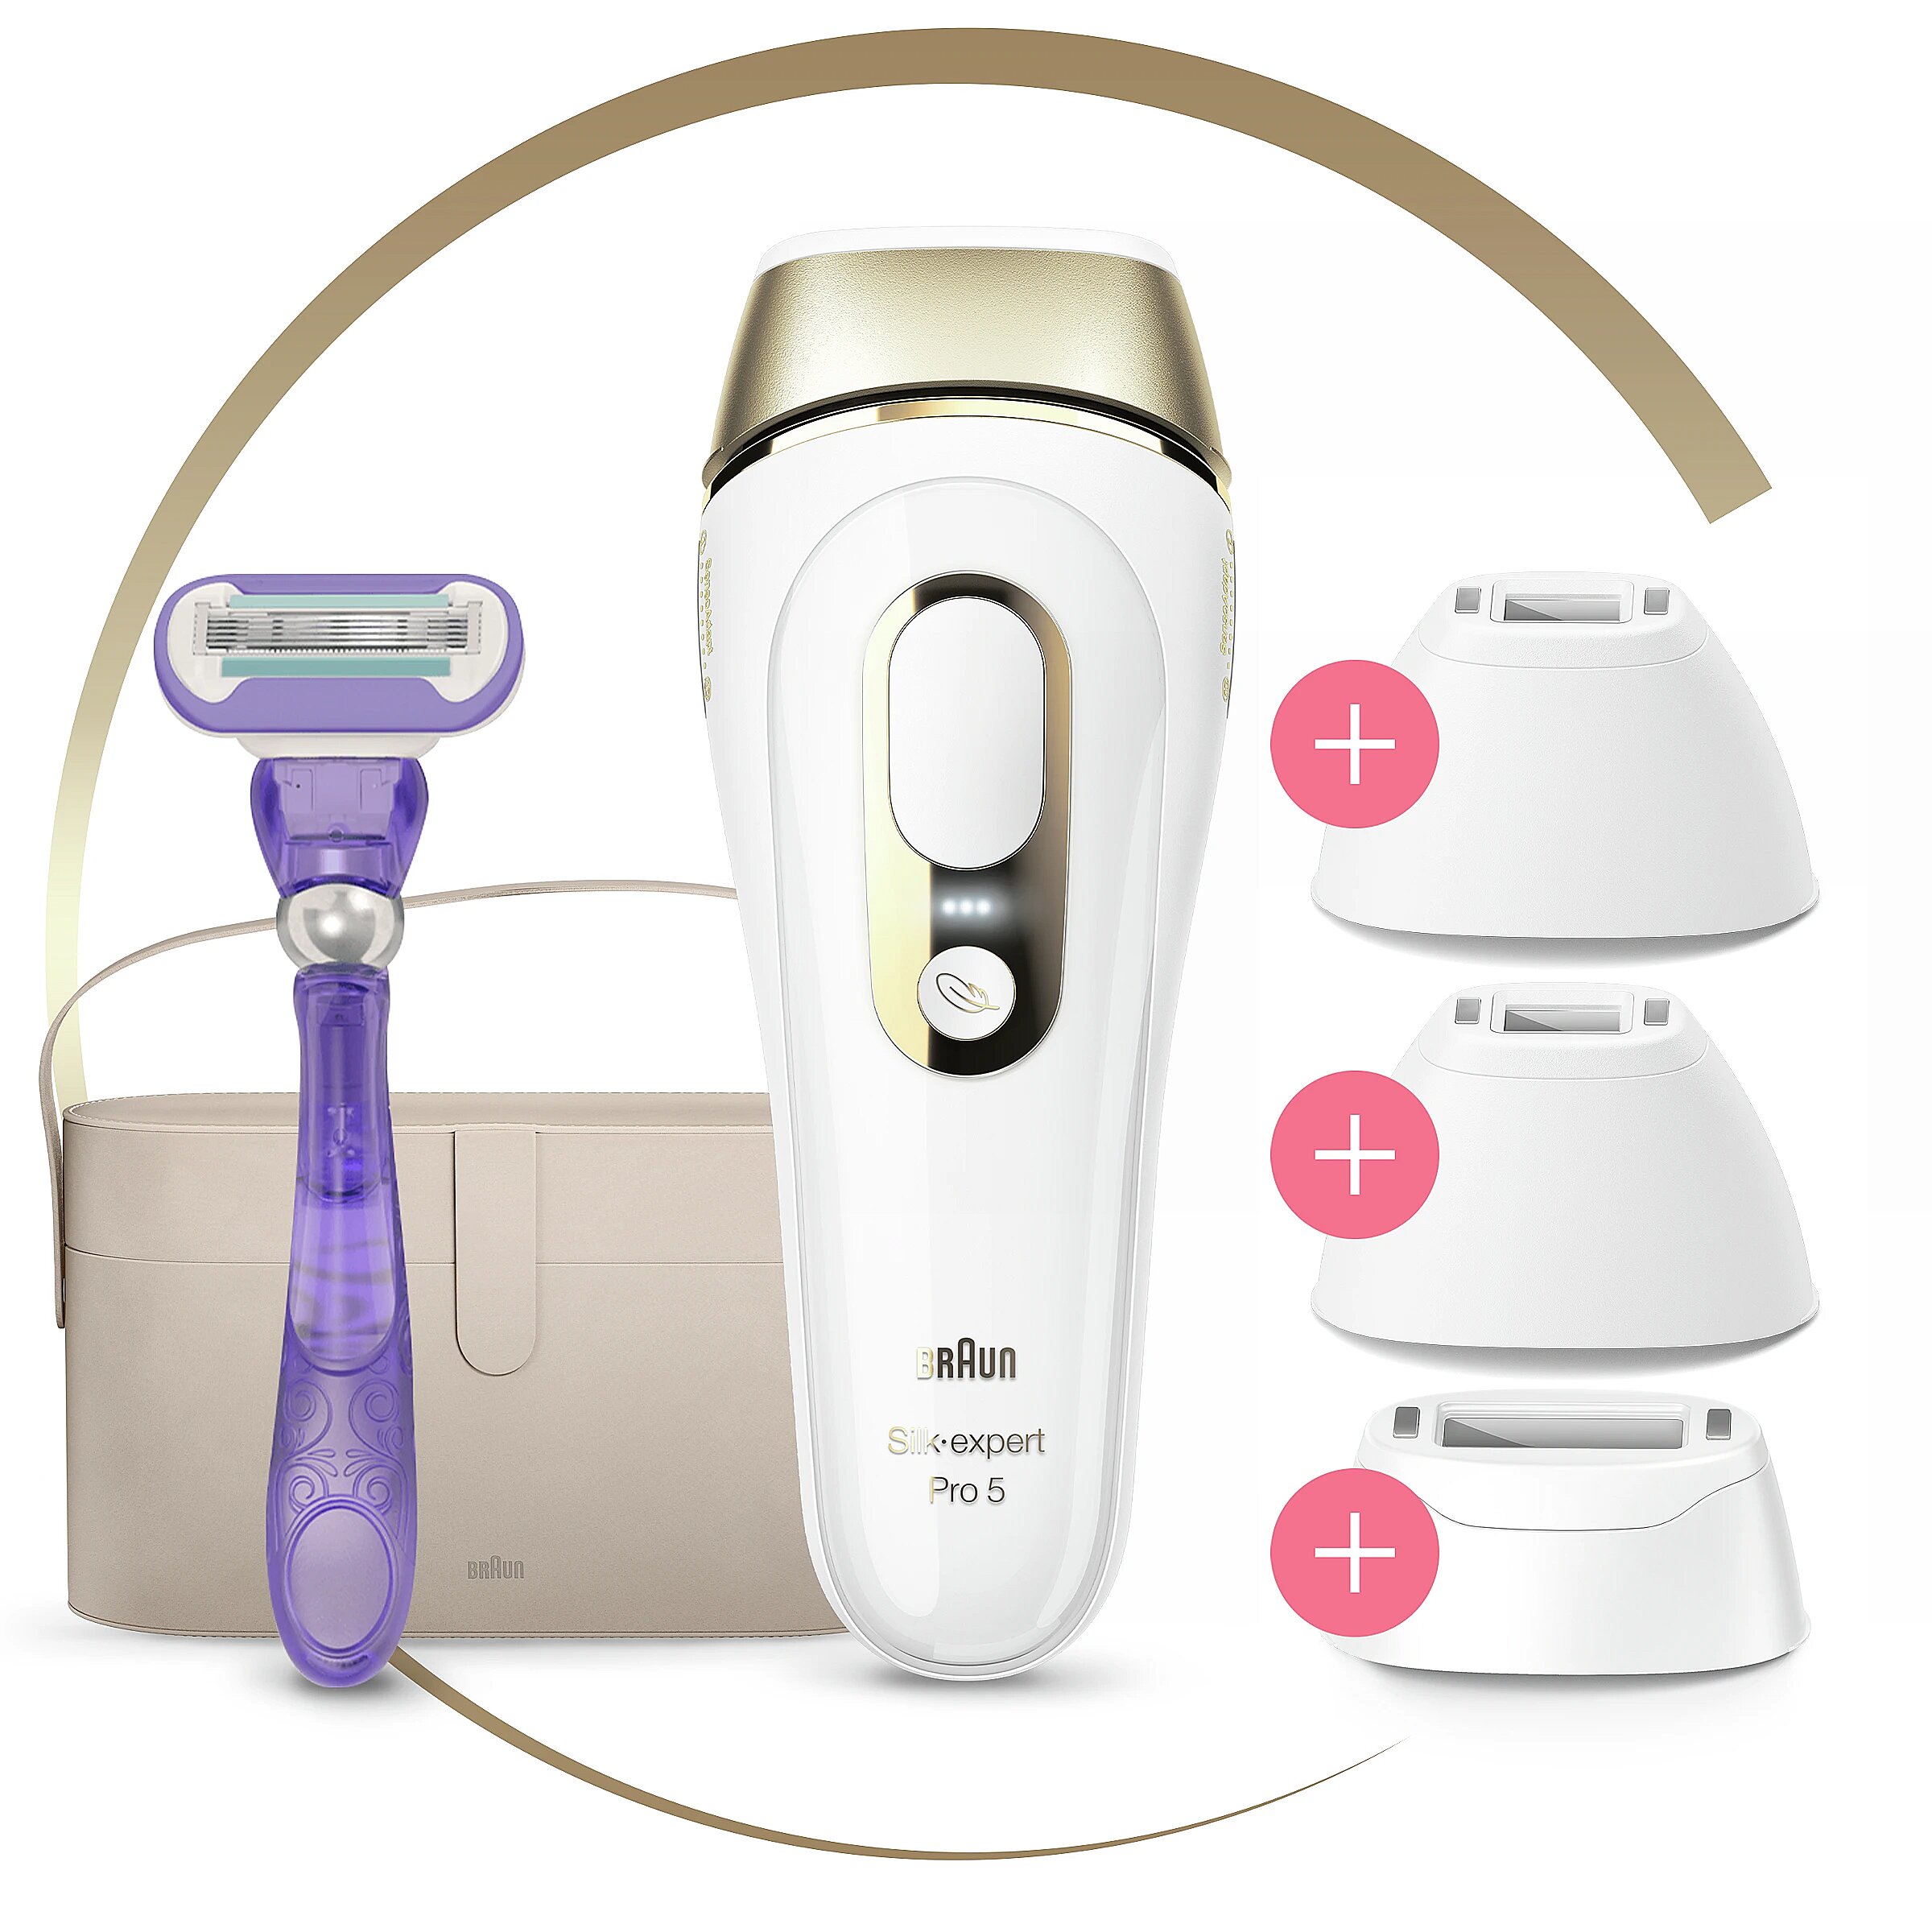 Braun hair removal device Silk-expert Pro 5 PL5347 + Gillette Venus razor,  White/Gold (PL5347)